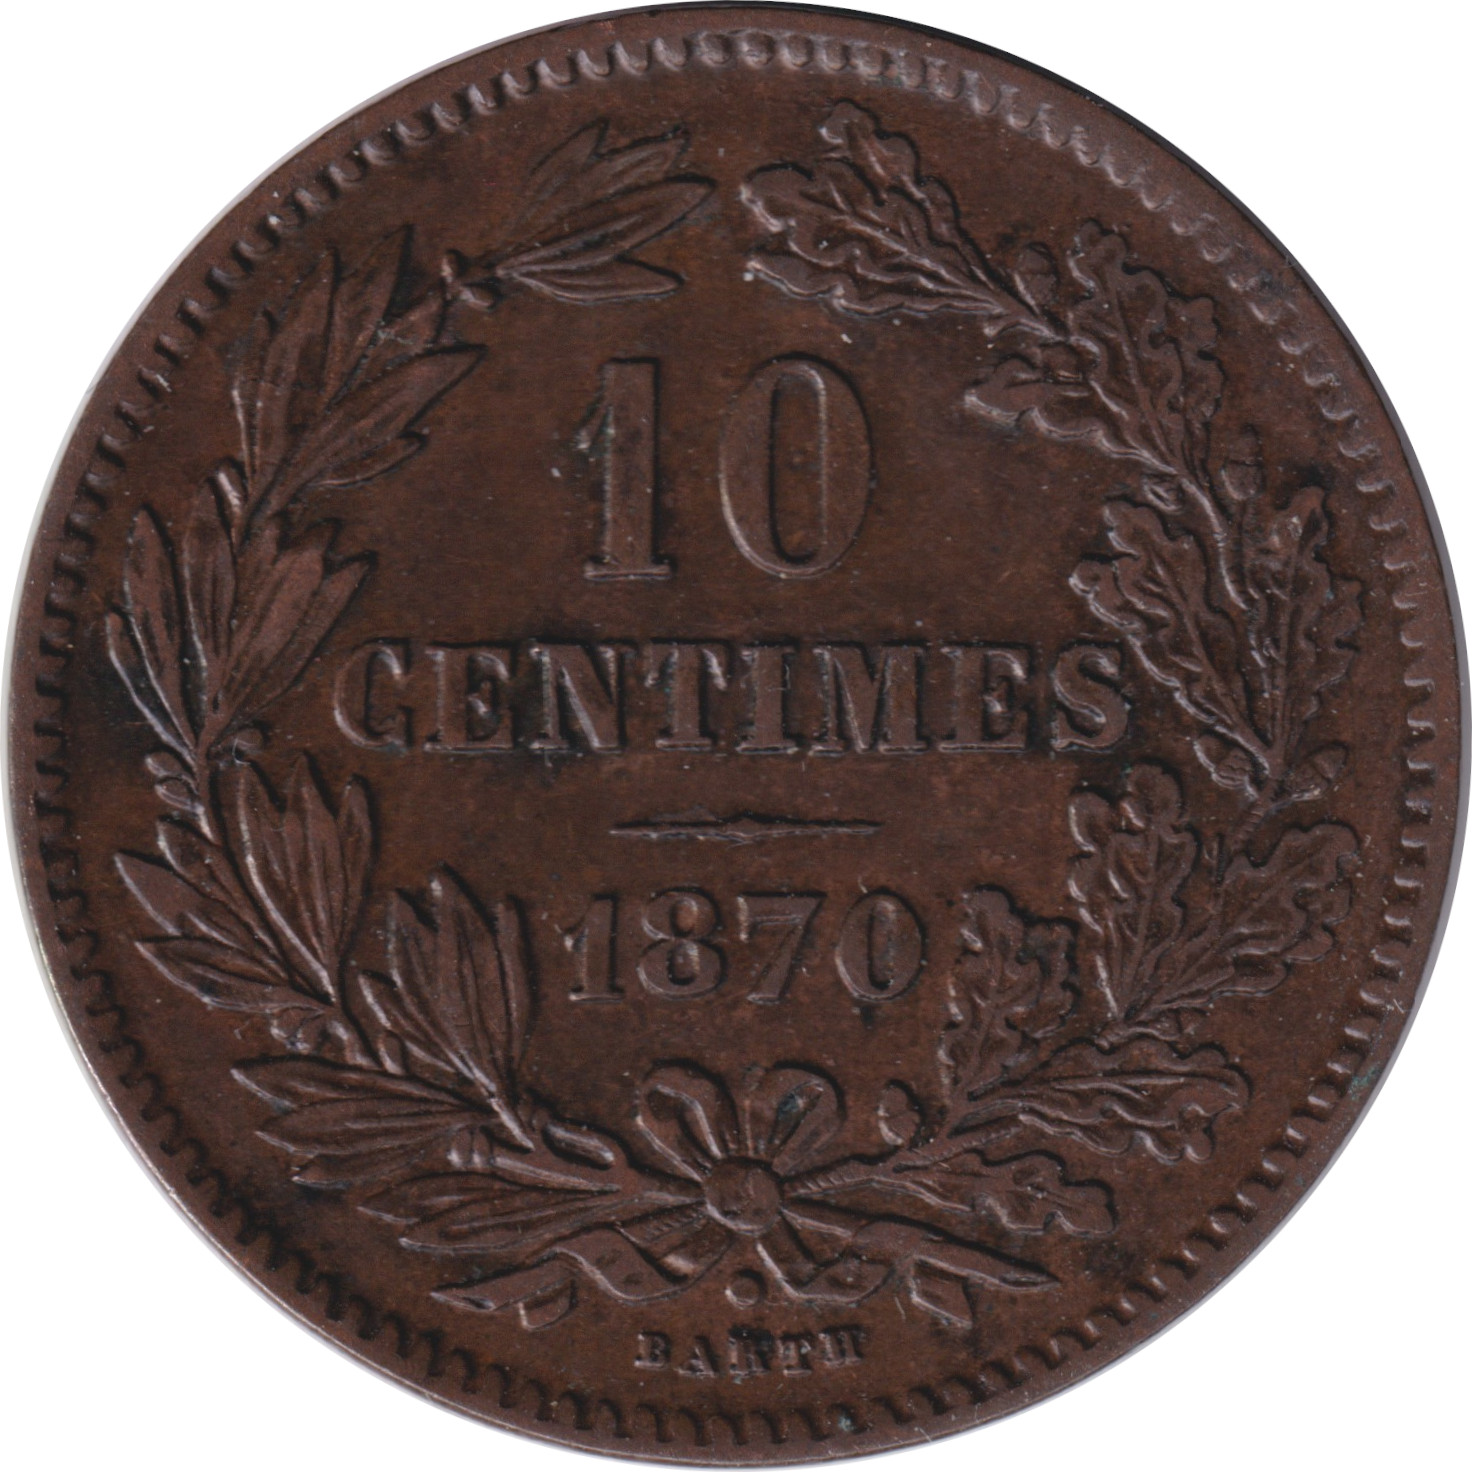 10 centimes - Blason